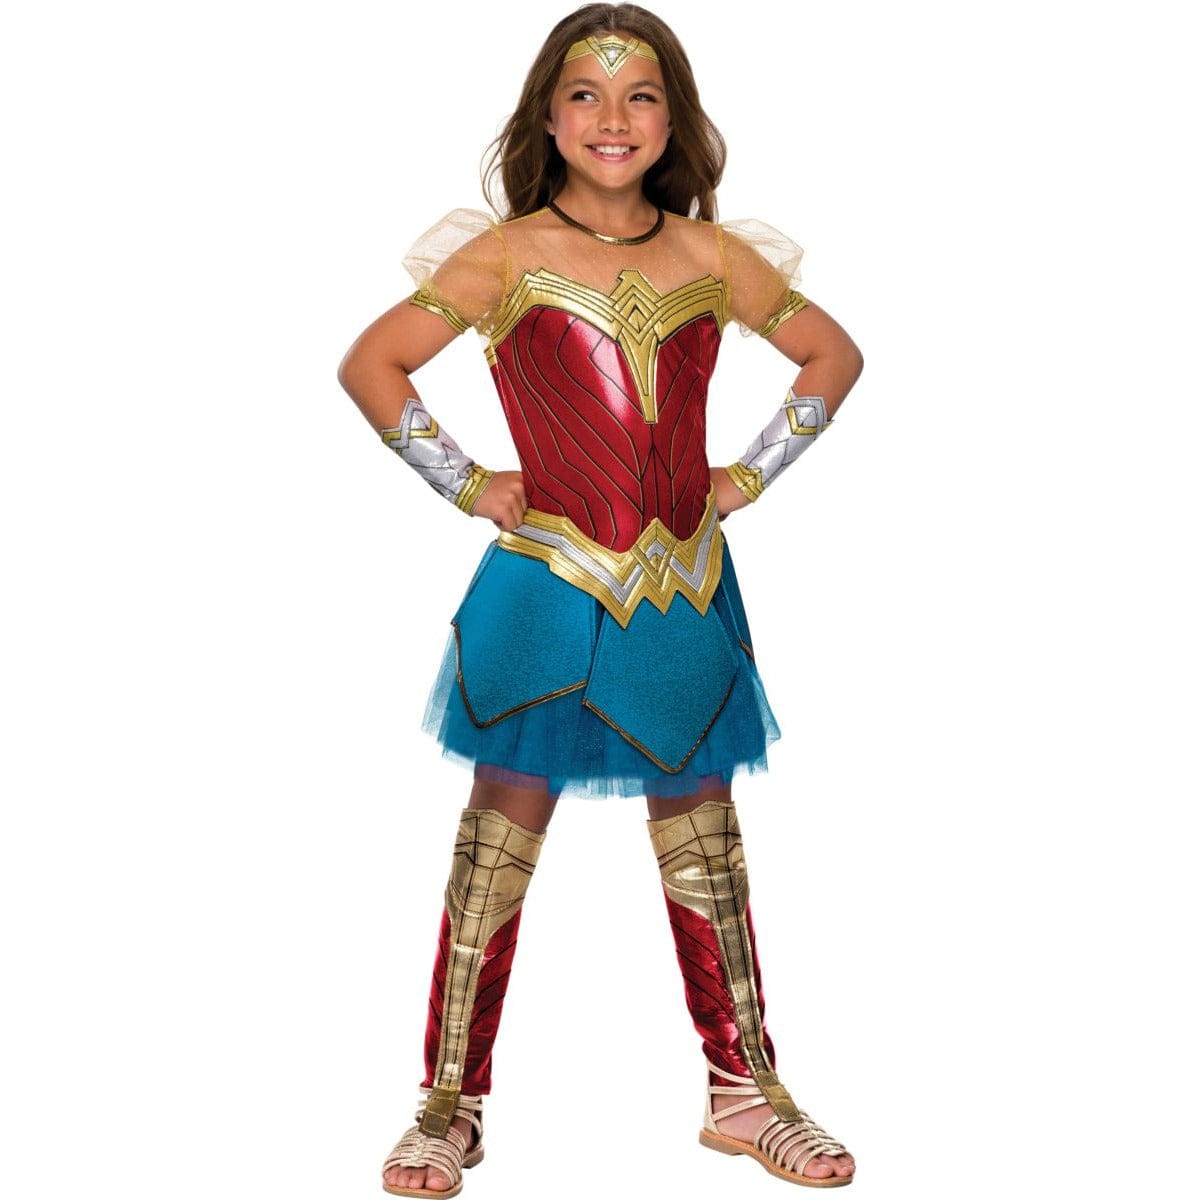 Wonder woman outfit, Wonder woman costume, Wonder woman cosplay